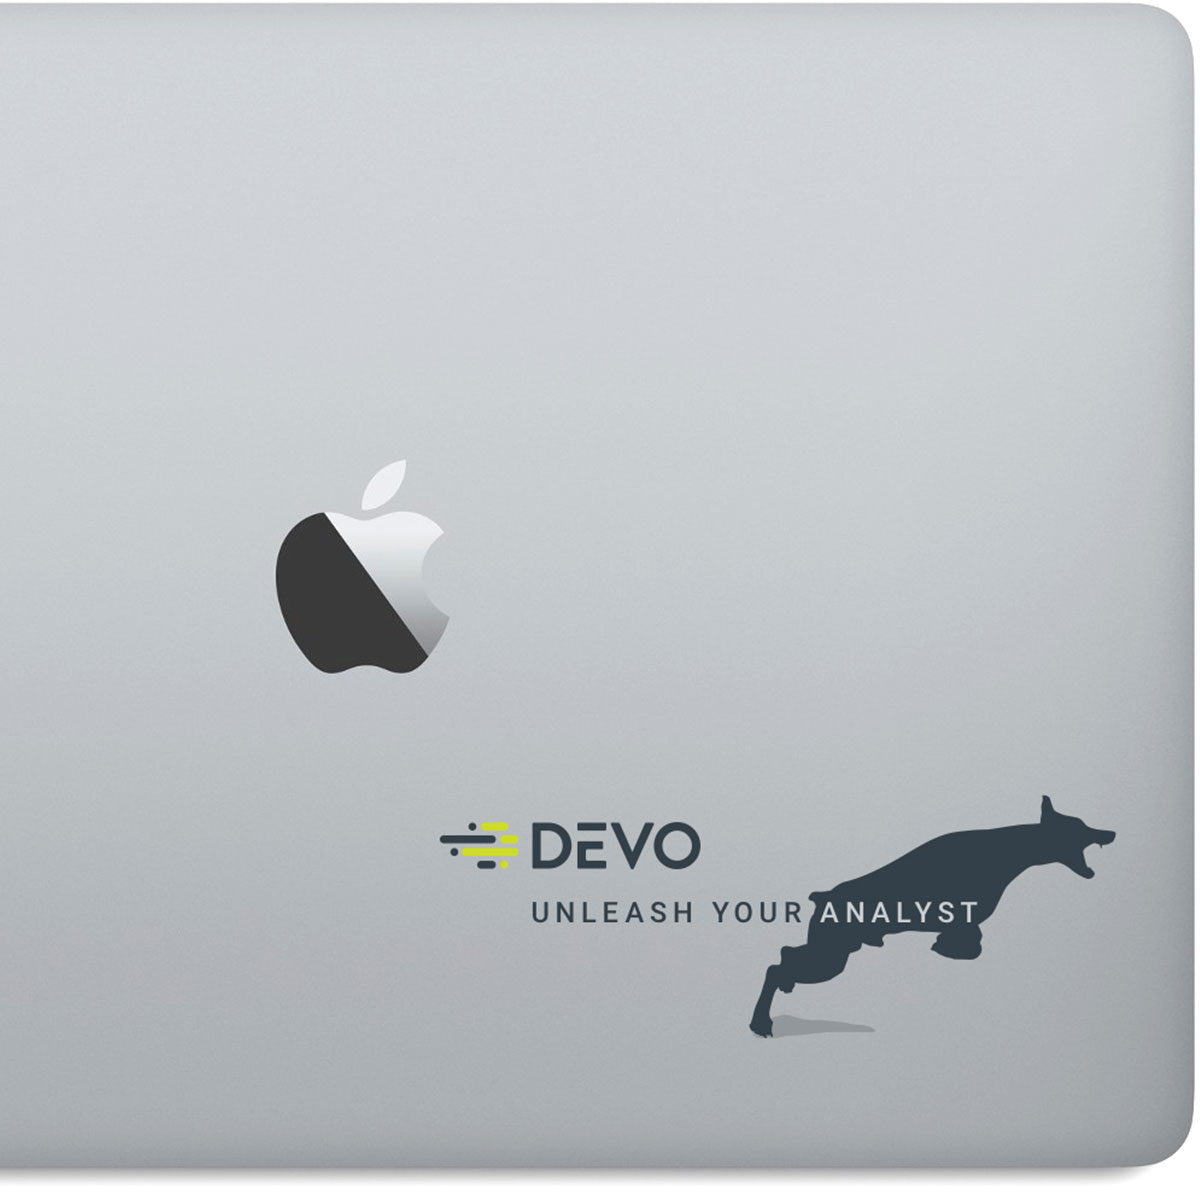 Devo Security Campaign – "Unleash Your Analyst" Laptop Sticker